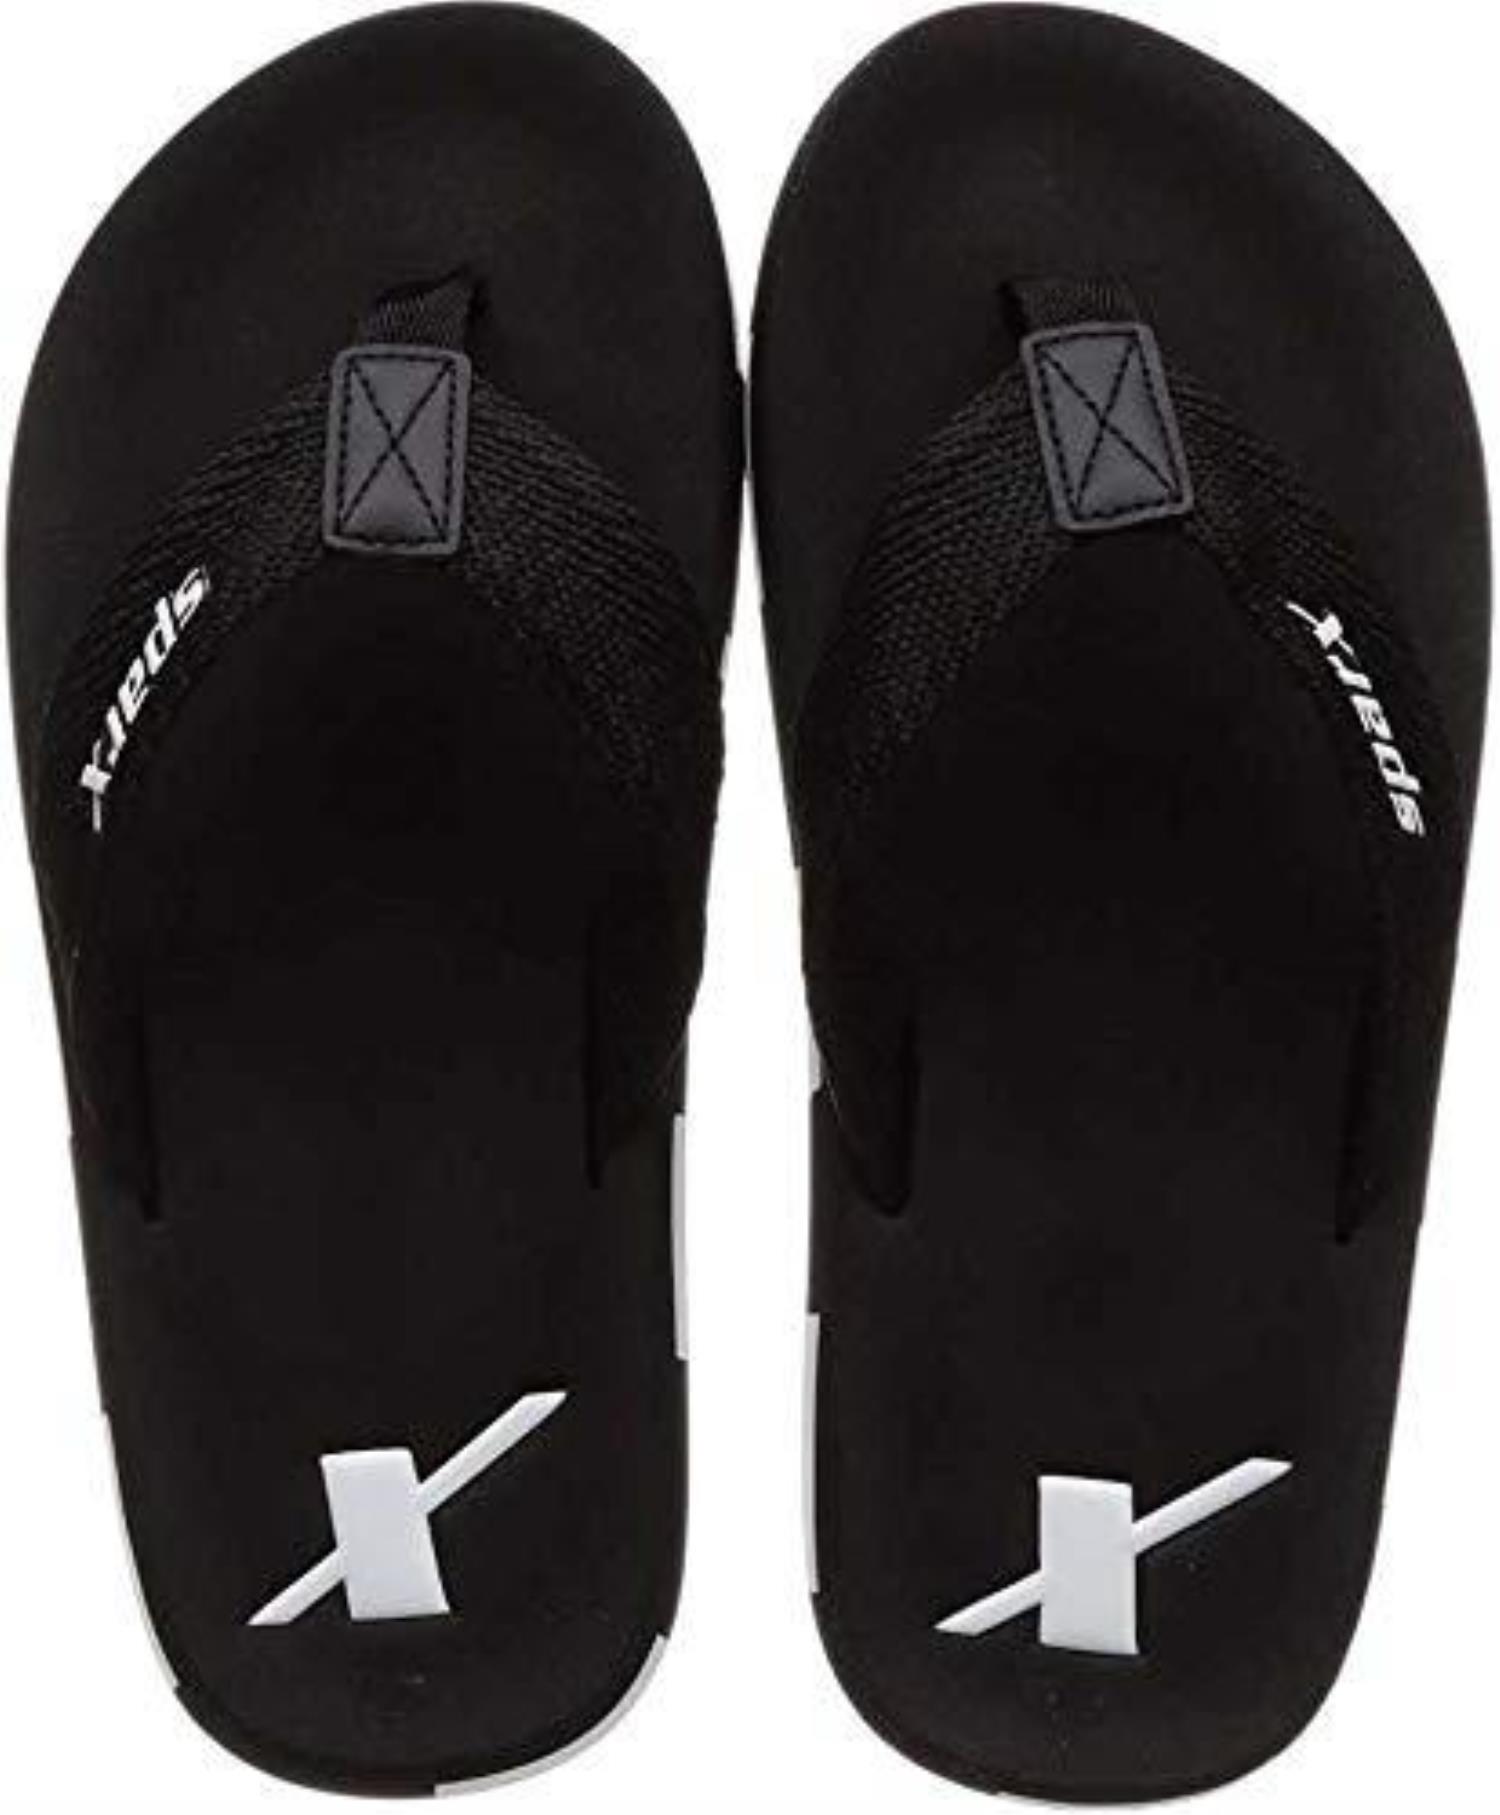 Sparx Brand Men's SS-101 Chappal/Sandal/Flip Flop (Black) :: RAJASHOES